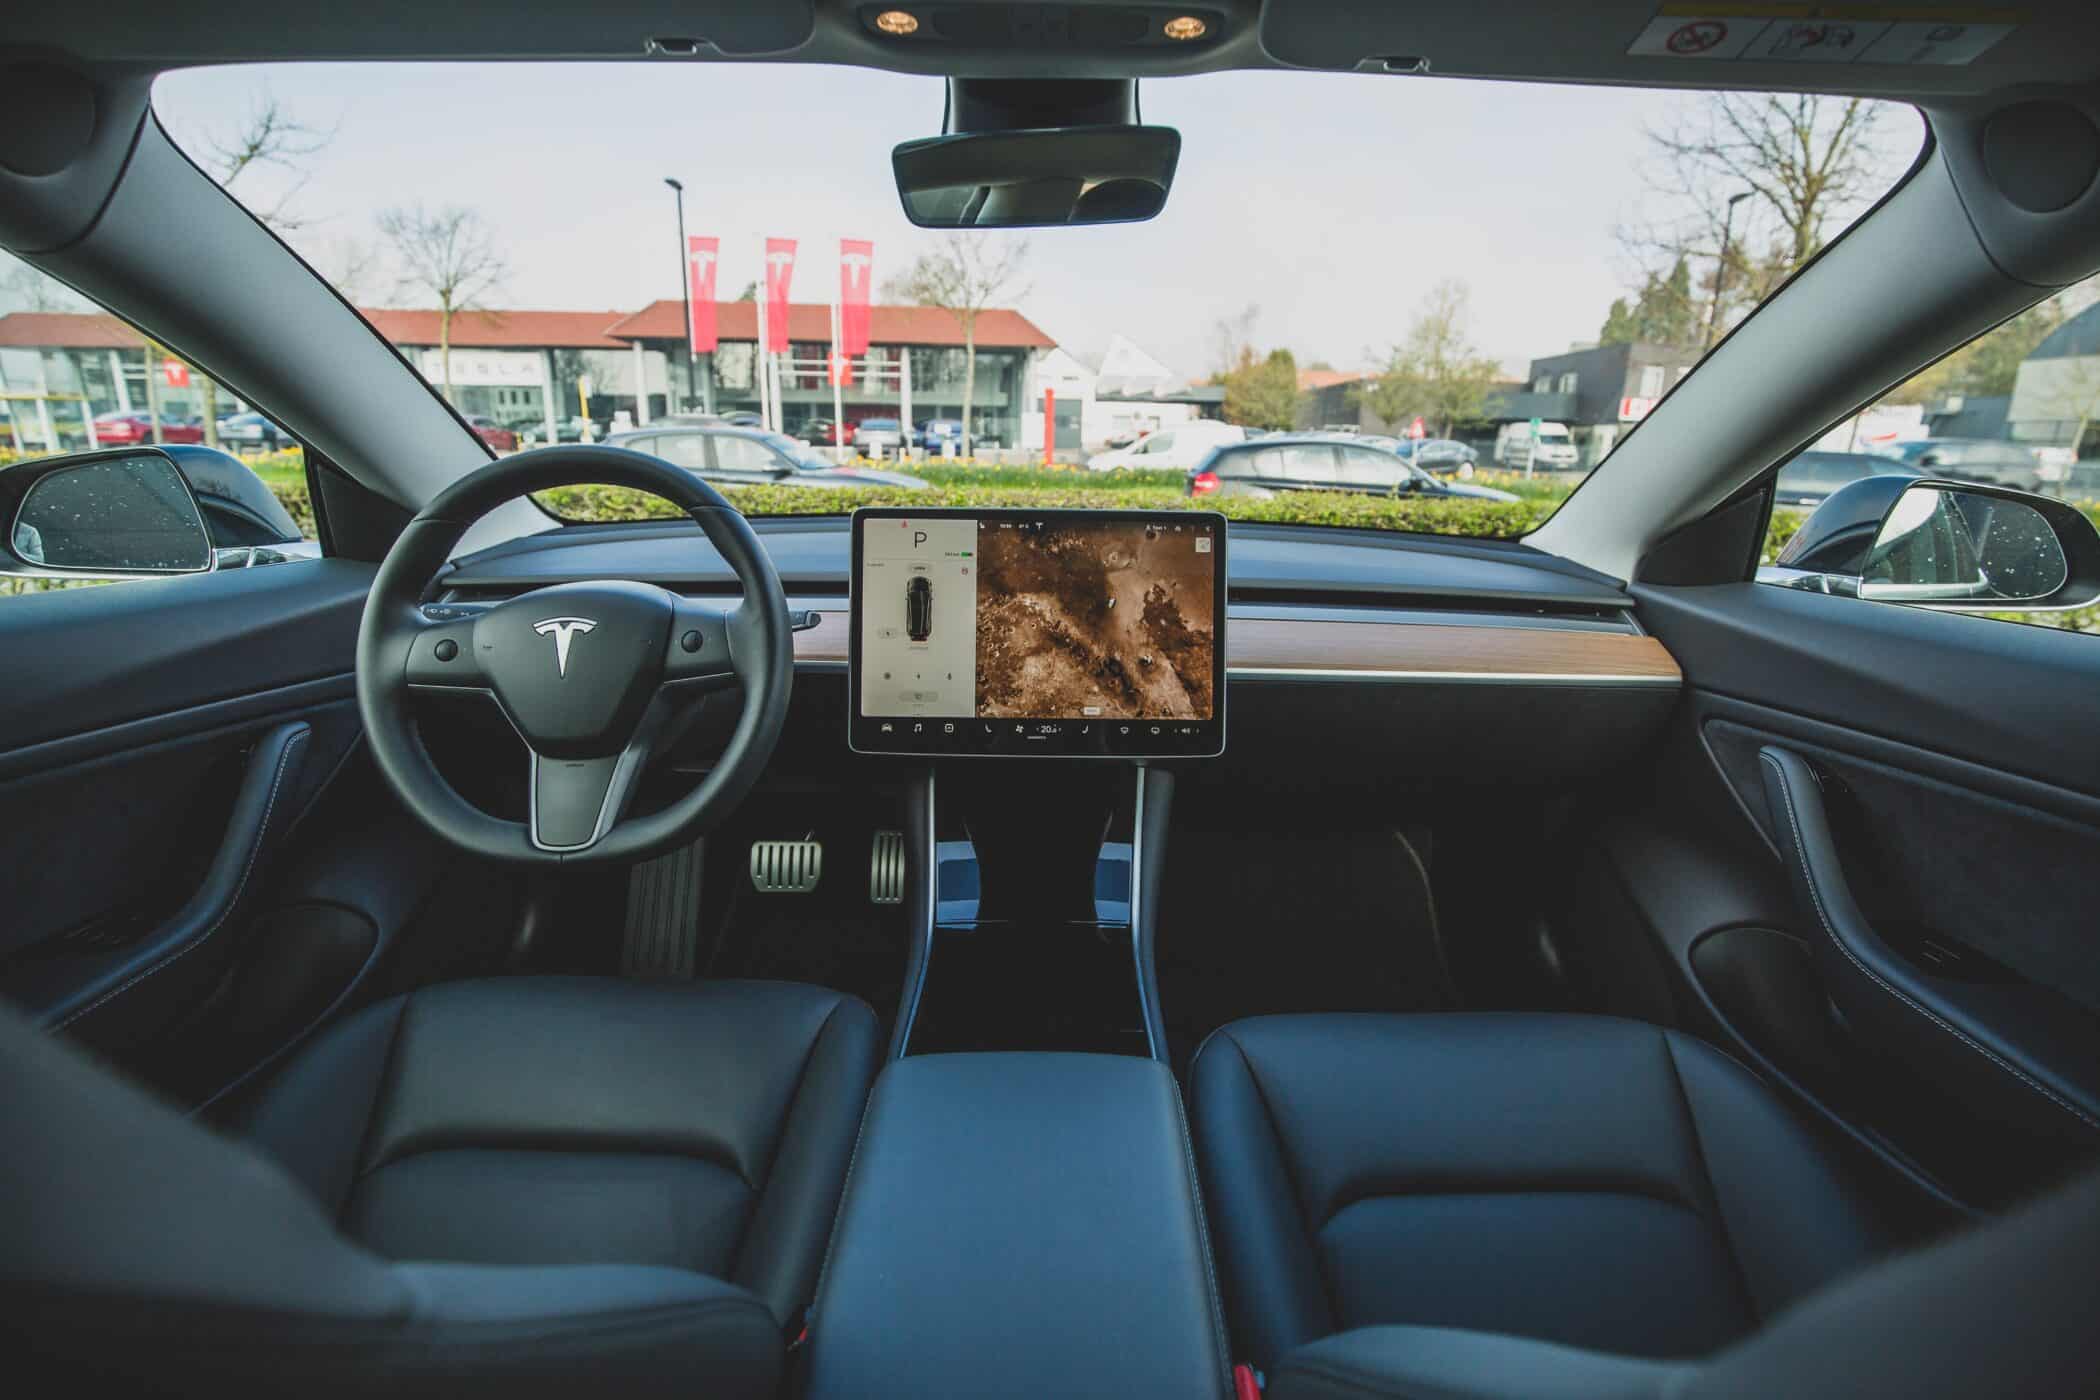 Teslaの従業員が顧客の車載カメラ録画を社内で共有し、楽しんでいた事が報じられる